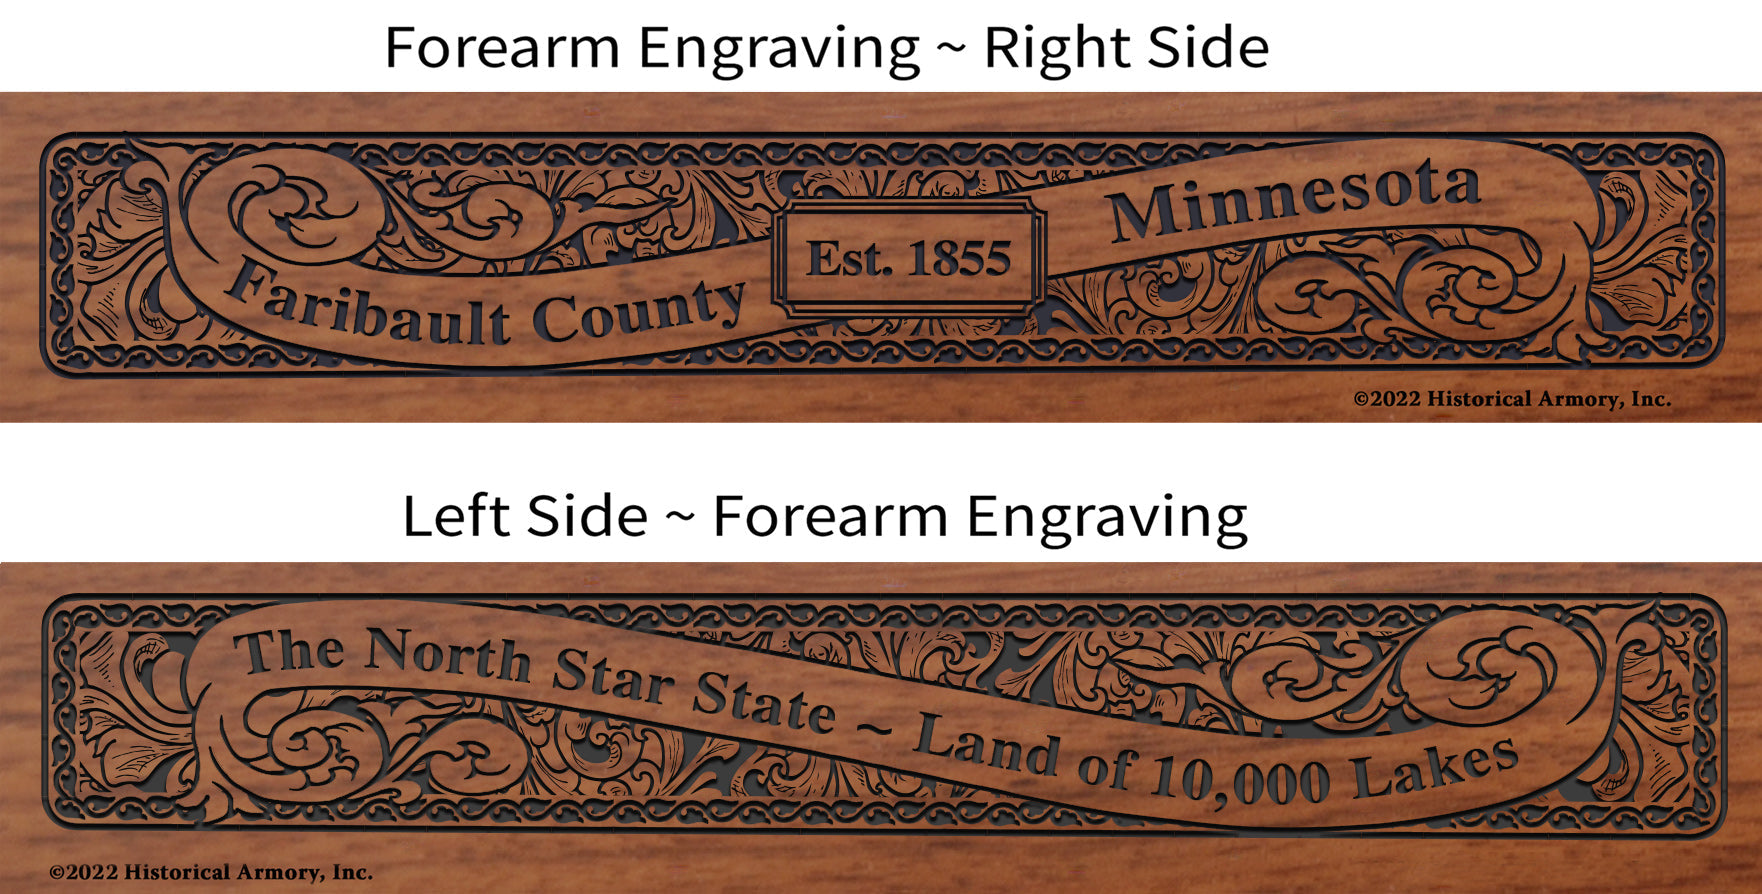 Faribault County Minnesota Engraved Rifle Forearm